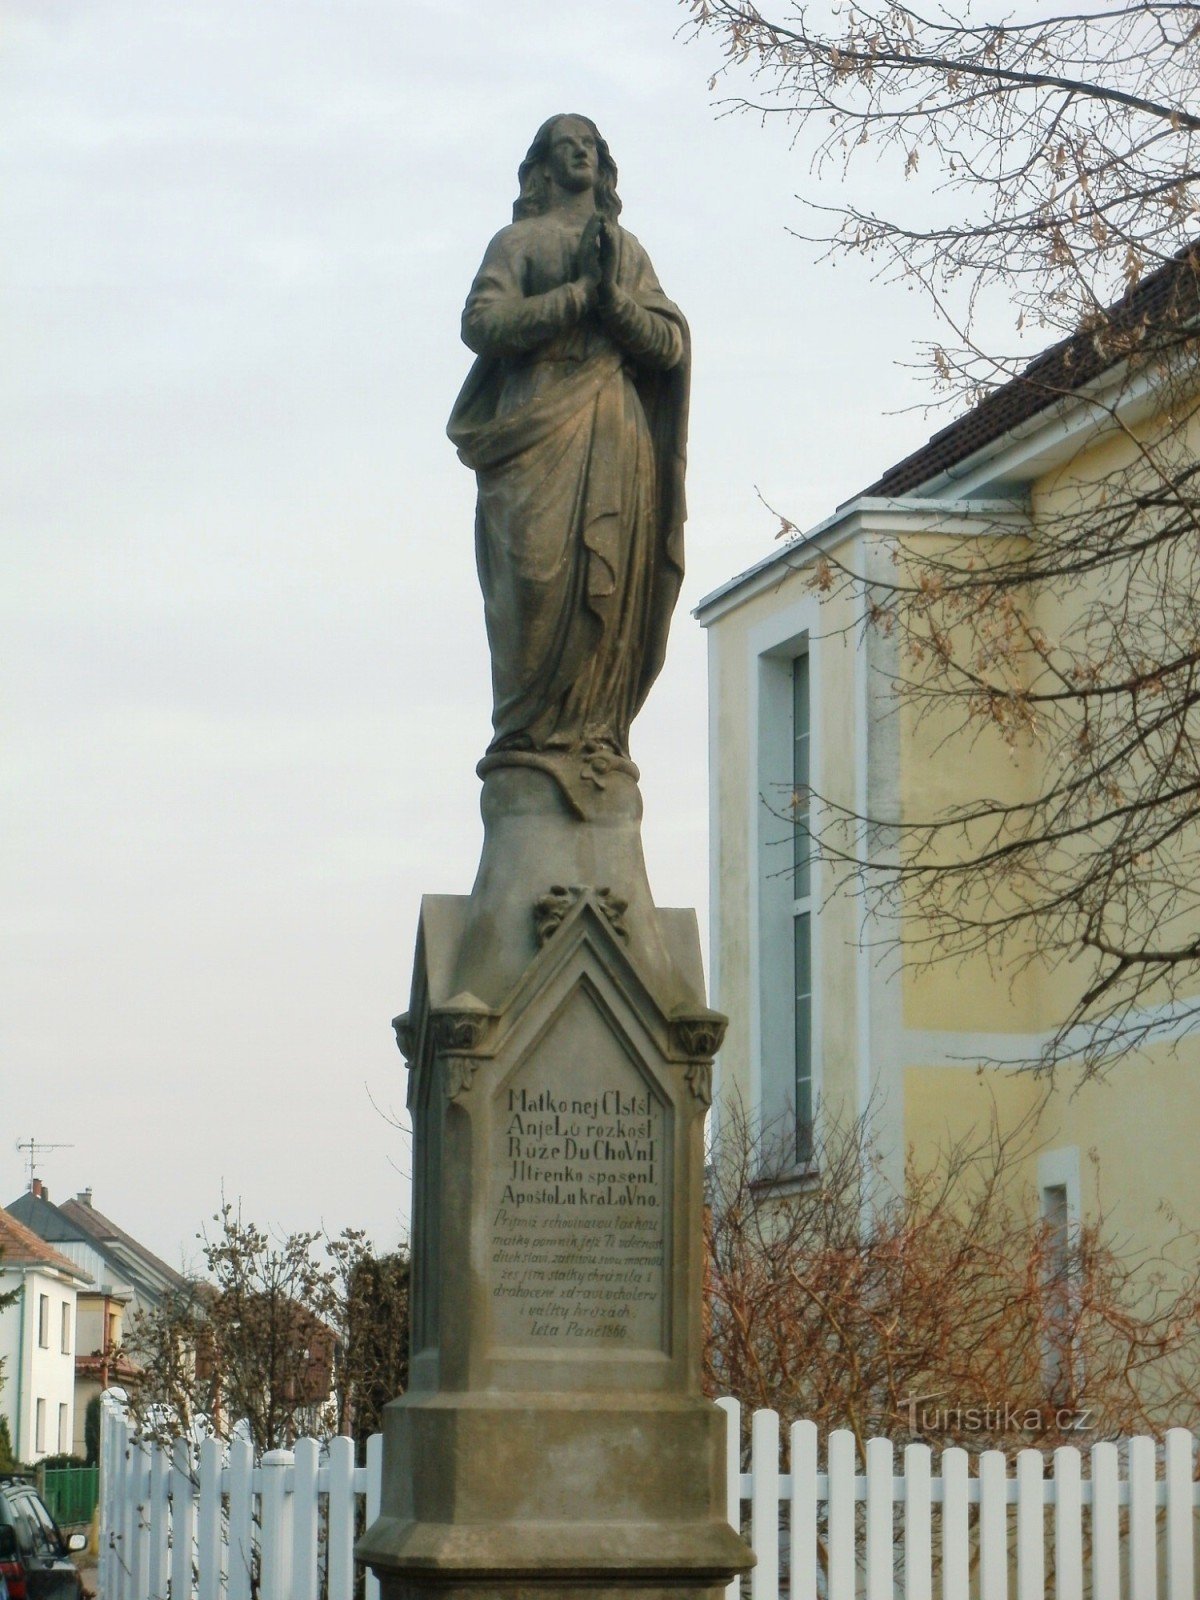 Nový Bydžov - a monument with a statue of St. Virgin Mary